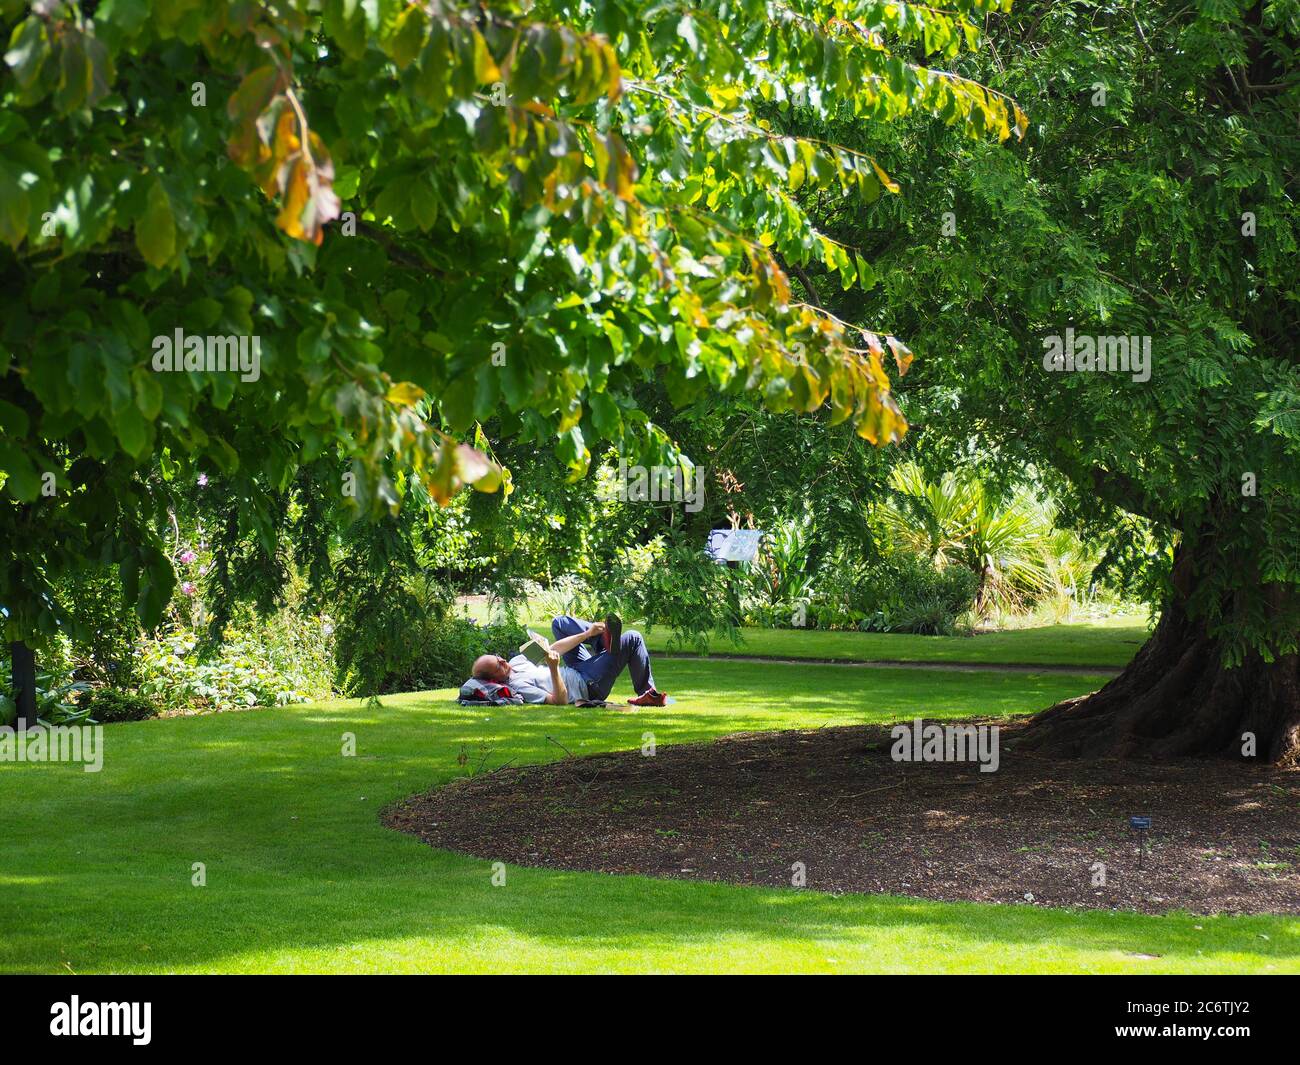 Oxford, UK. 12th July 2020. A warm, sunny day brings visitors to Oxford University's Botanic Garden. Credit: Angela Swann/Alamy Live News Stock Photo